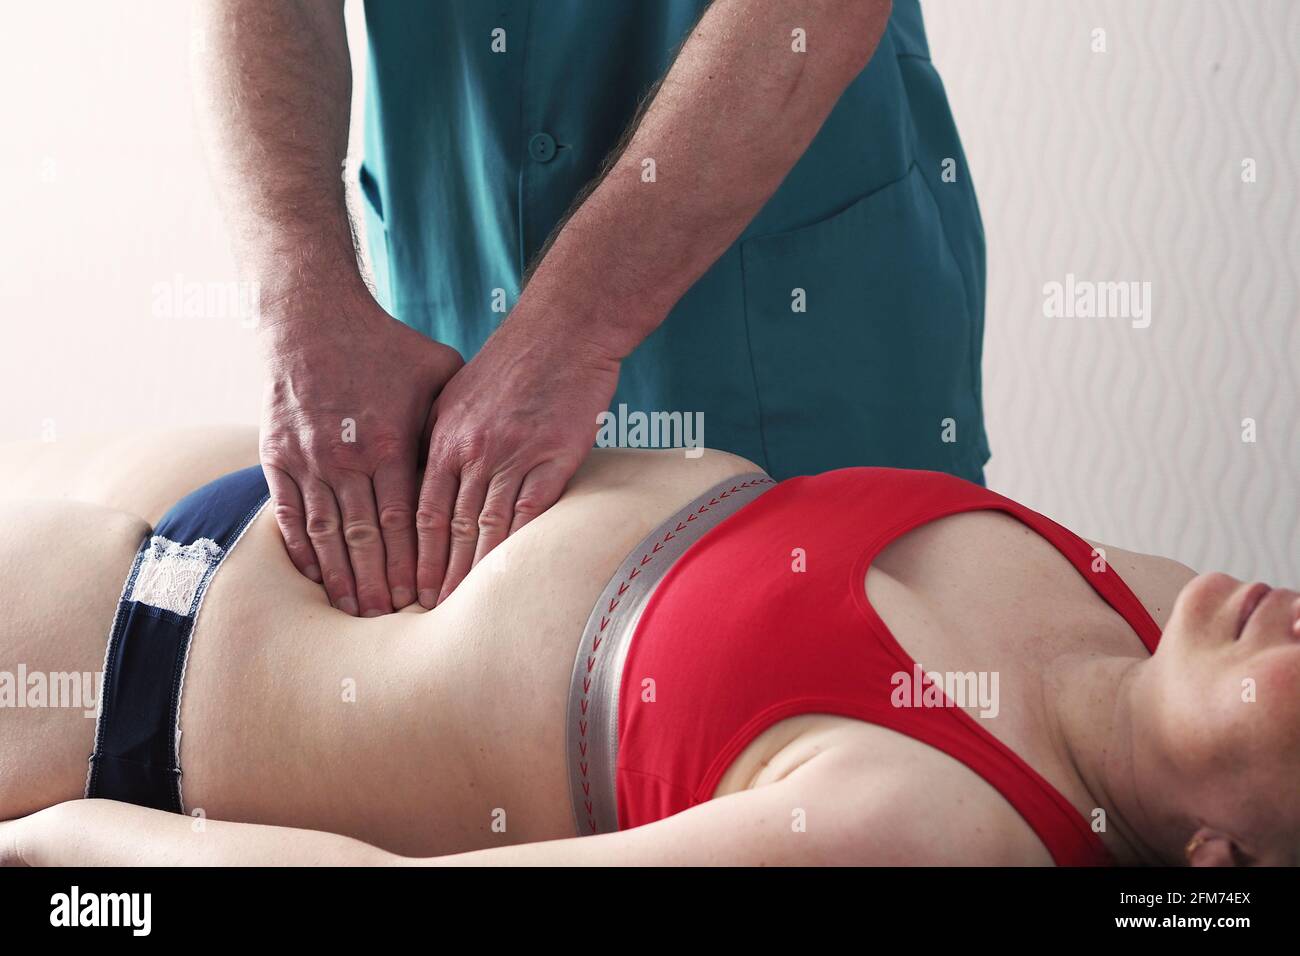 Belly massage. Anti-cellulite belly massage. Stock Photo